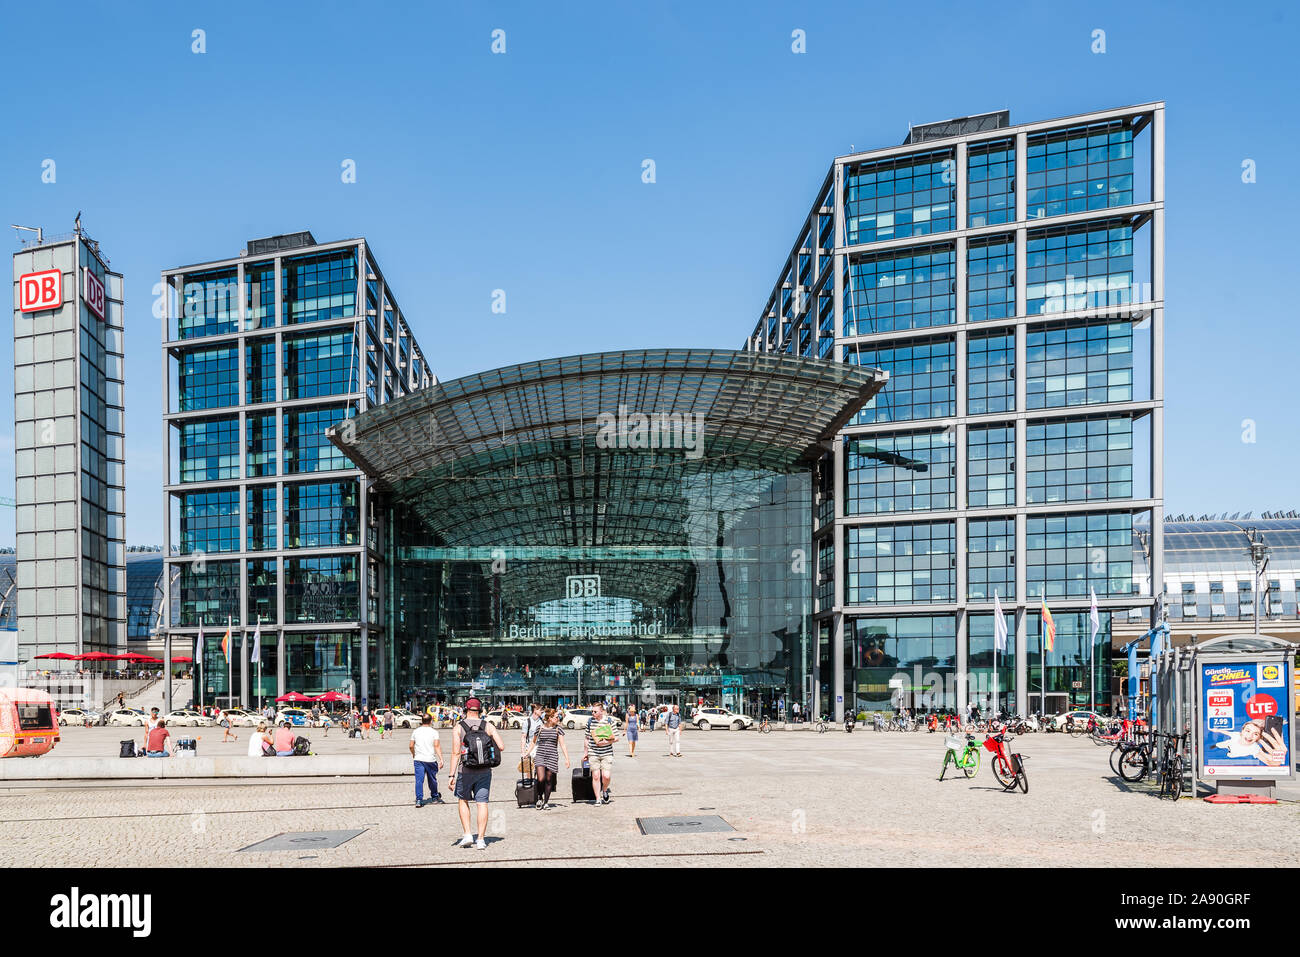 Berlin, Allemagne - 28 juillet 2019 : la gare centrale de Berlin. - Berlin Hauptbahnhof. L'architecture moderne en verre Banque D'Images